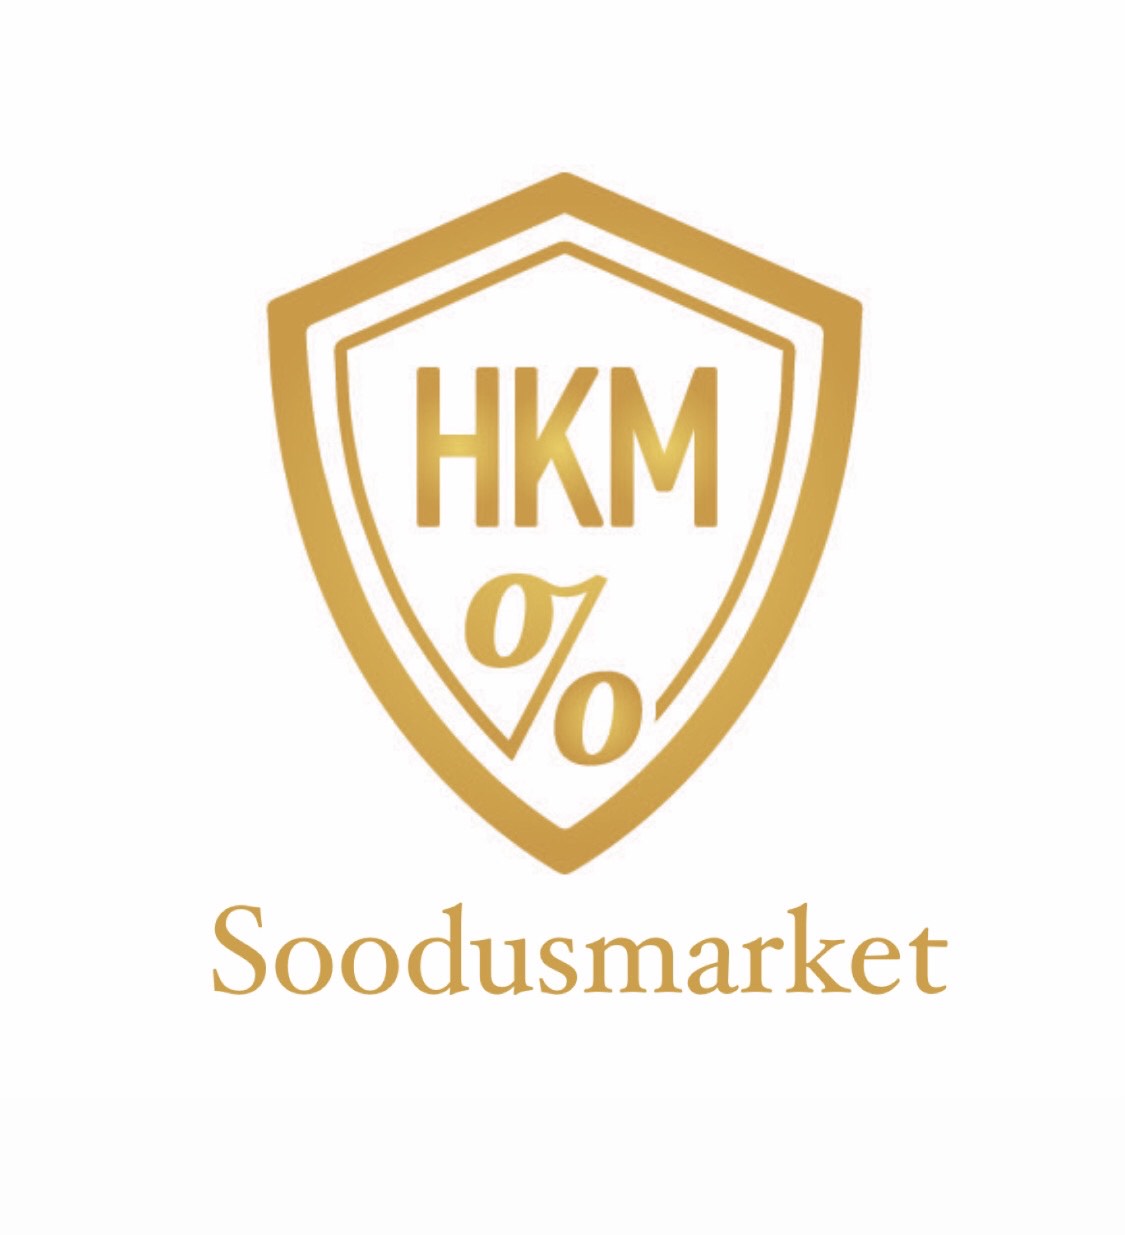 HKM Soodusmarket